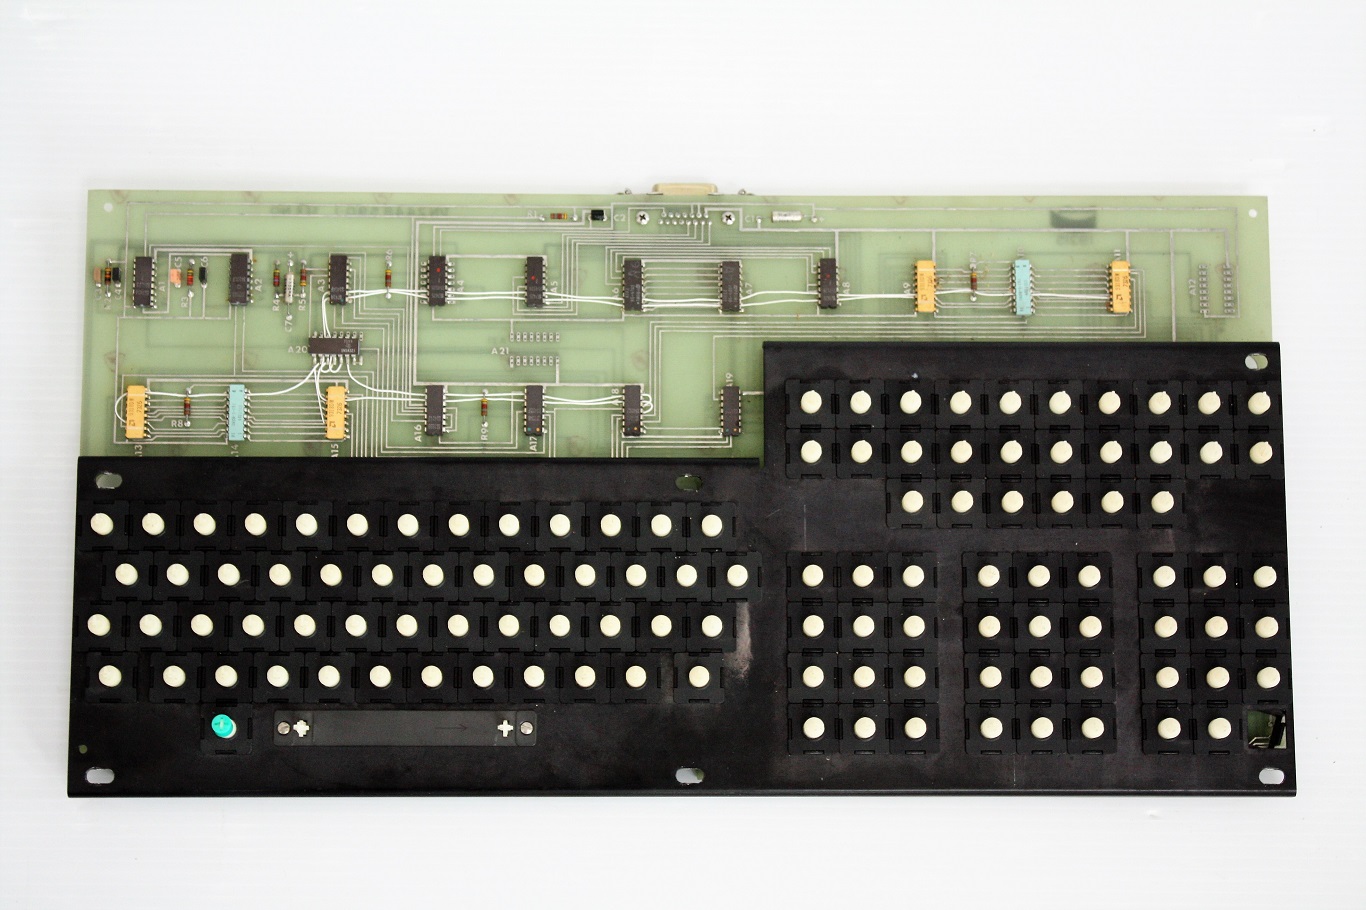 Bendix NASA Console - keyboard mechanism front